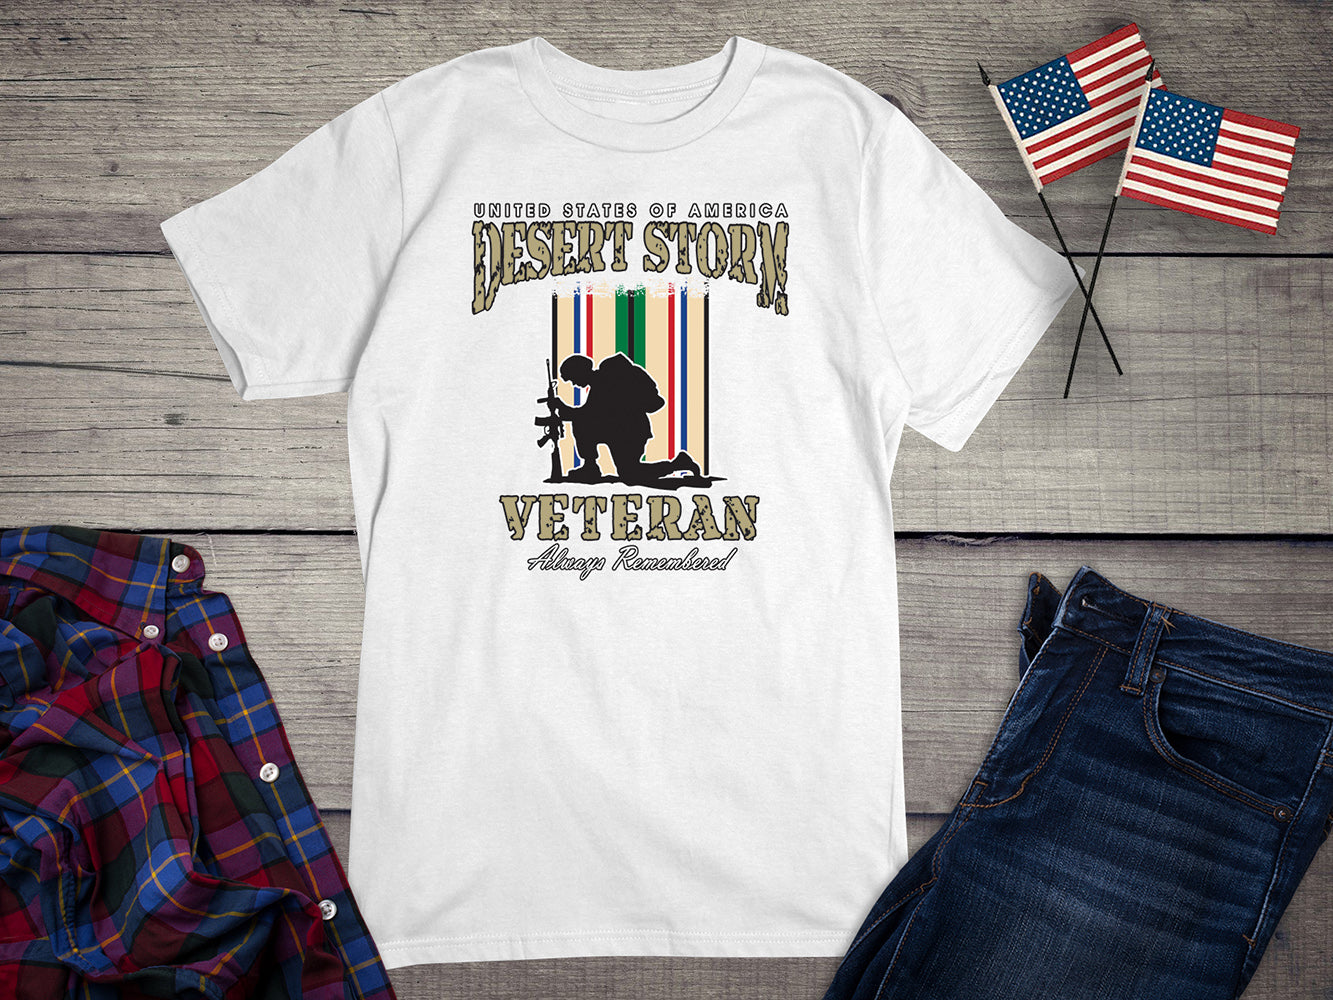 Always Remembered - Desert Storm T-shirt